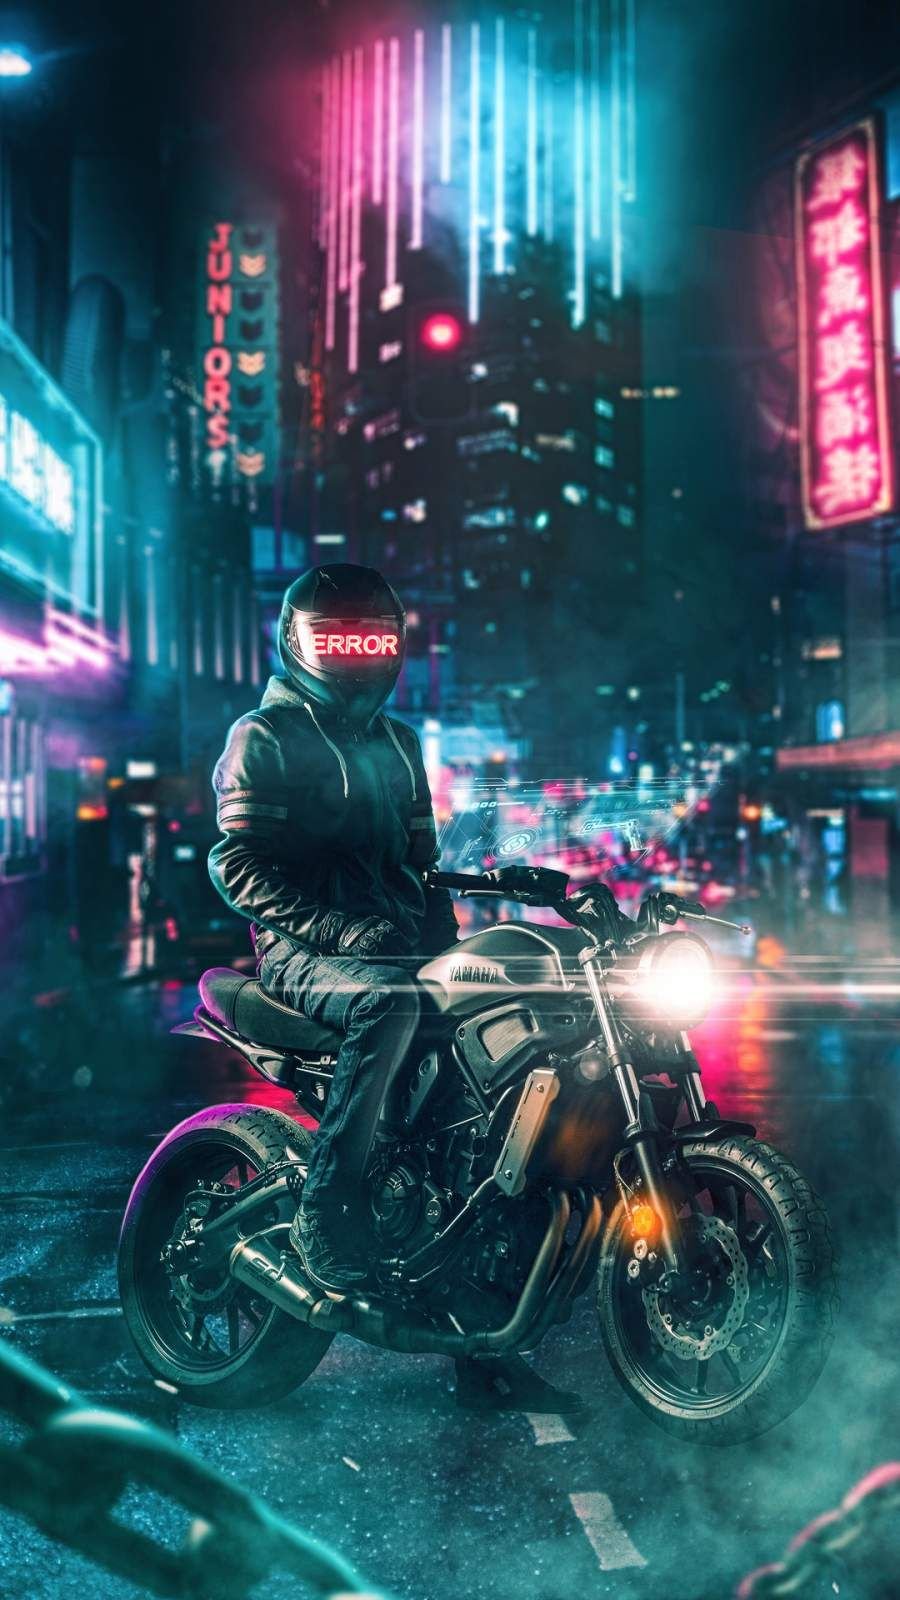 Bike Rider With Neon Light